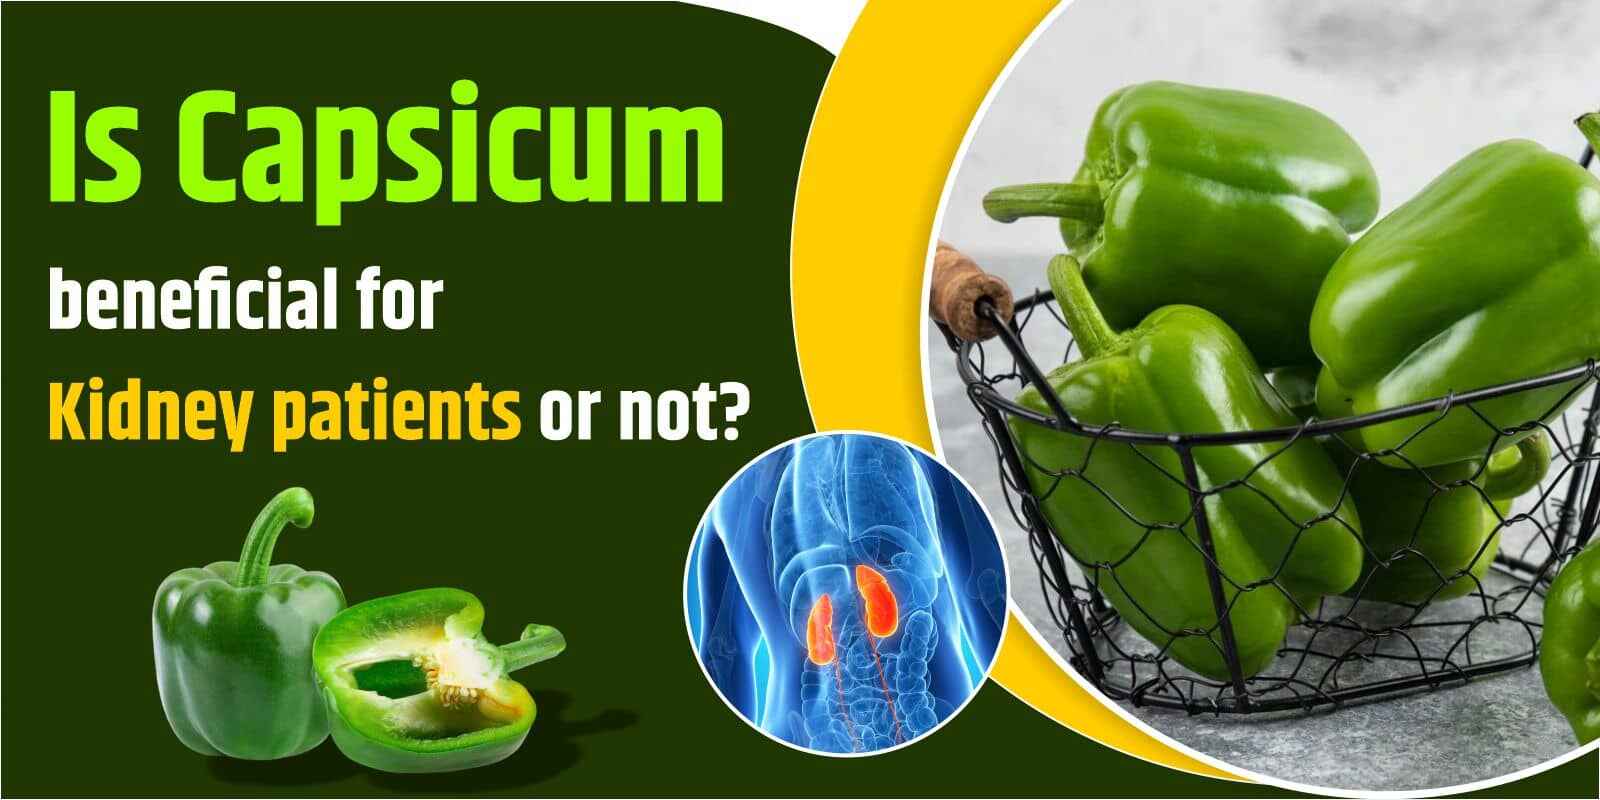 Is Capsicum beneficial for Kidney patients or not?